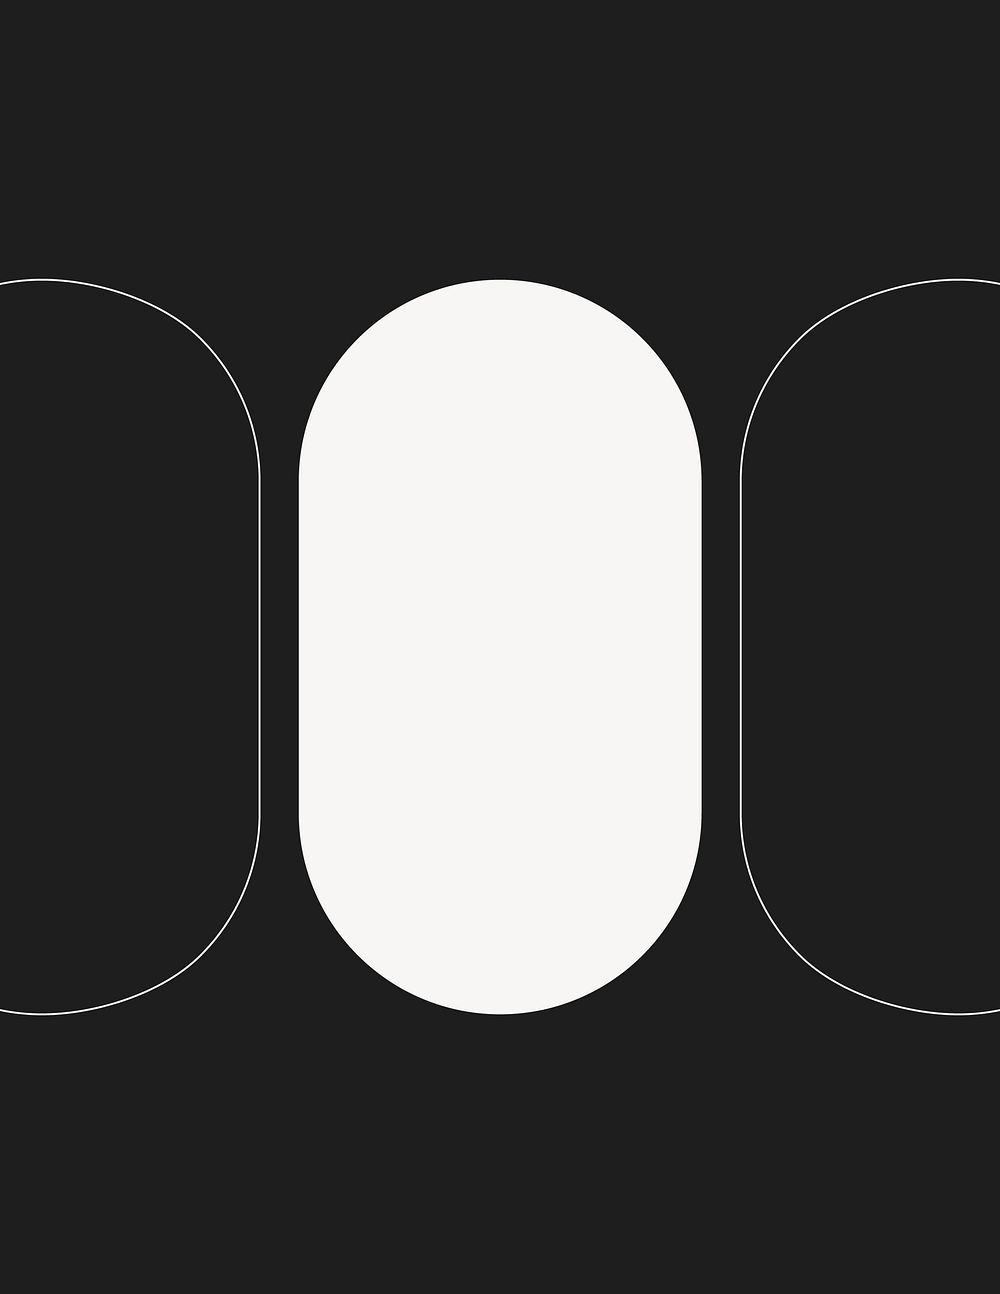 Minimal oval frame background, black geometric design vector